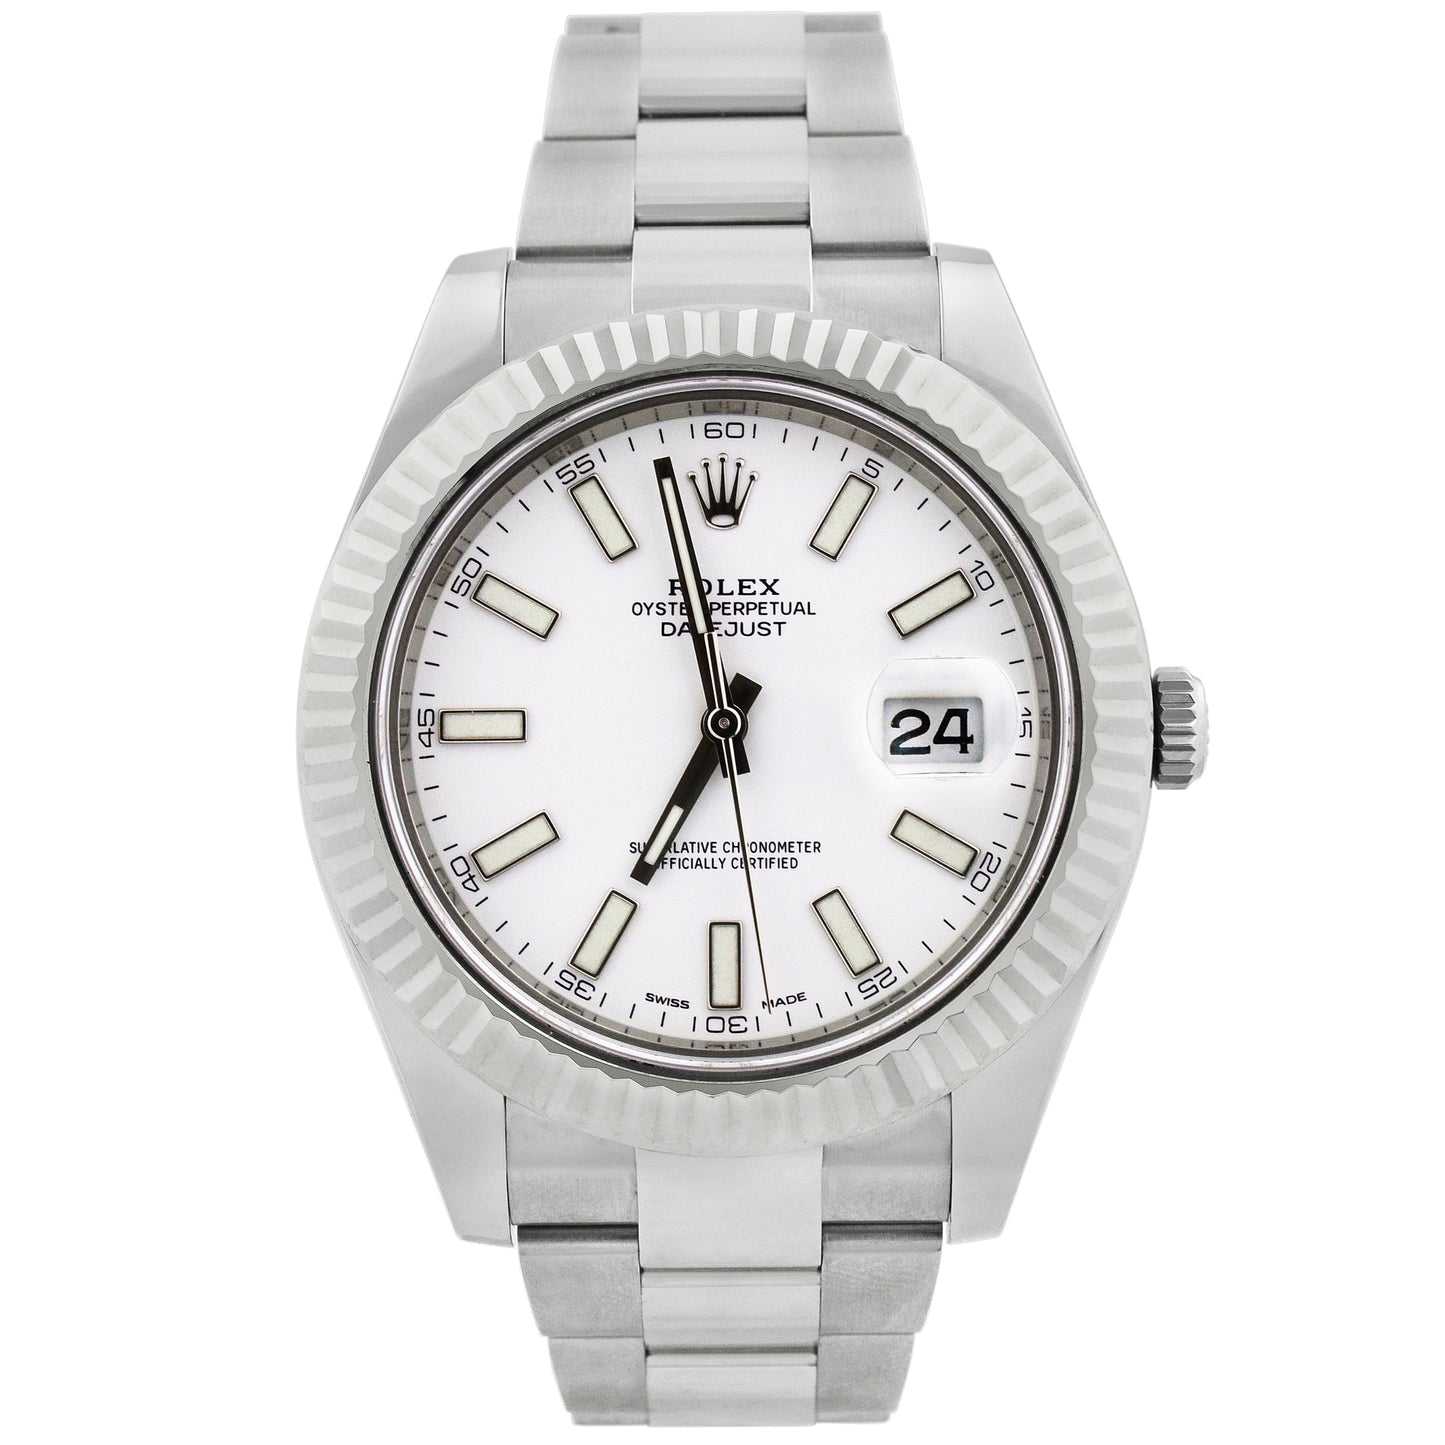 Rolex Datejust 41mm Stainless Steel White Roman Dial Watch Reference# 116334 - Happy Jewelers Fine Jewelry Lifetime Warranty